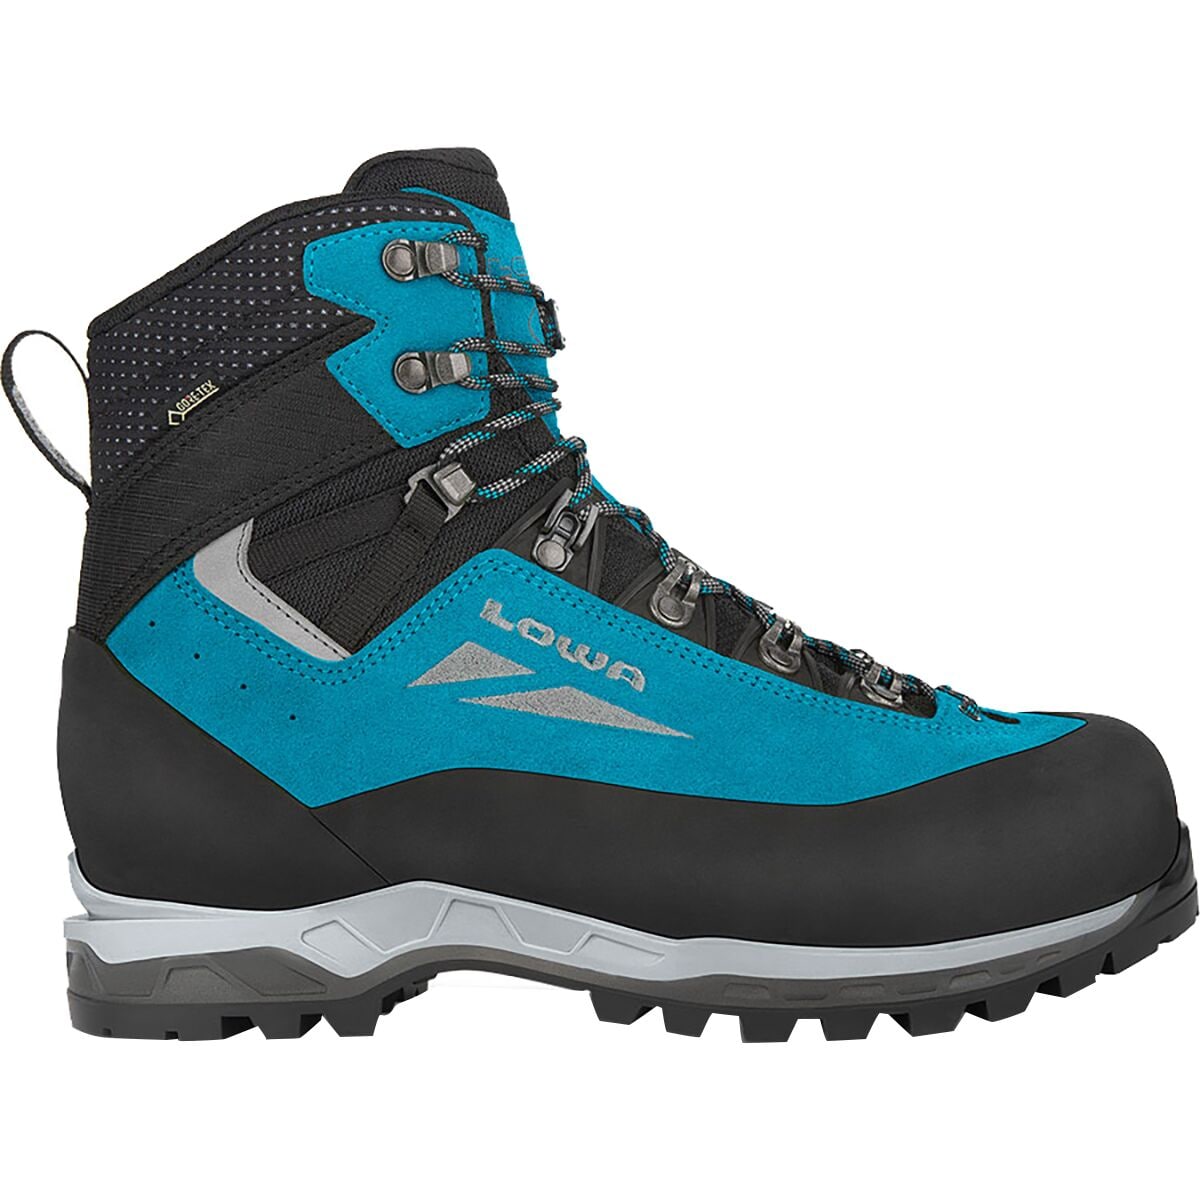 Cevedale Evo GTX Mountaineering Boot - Women